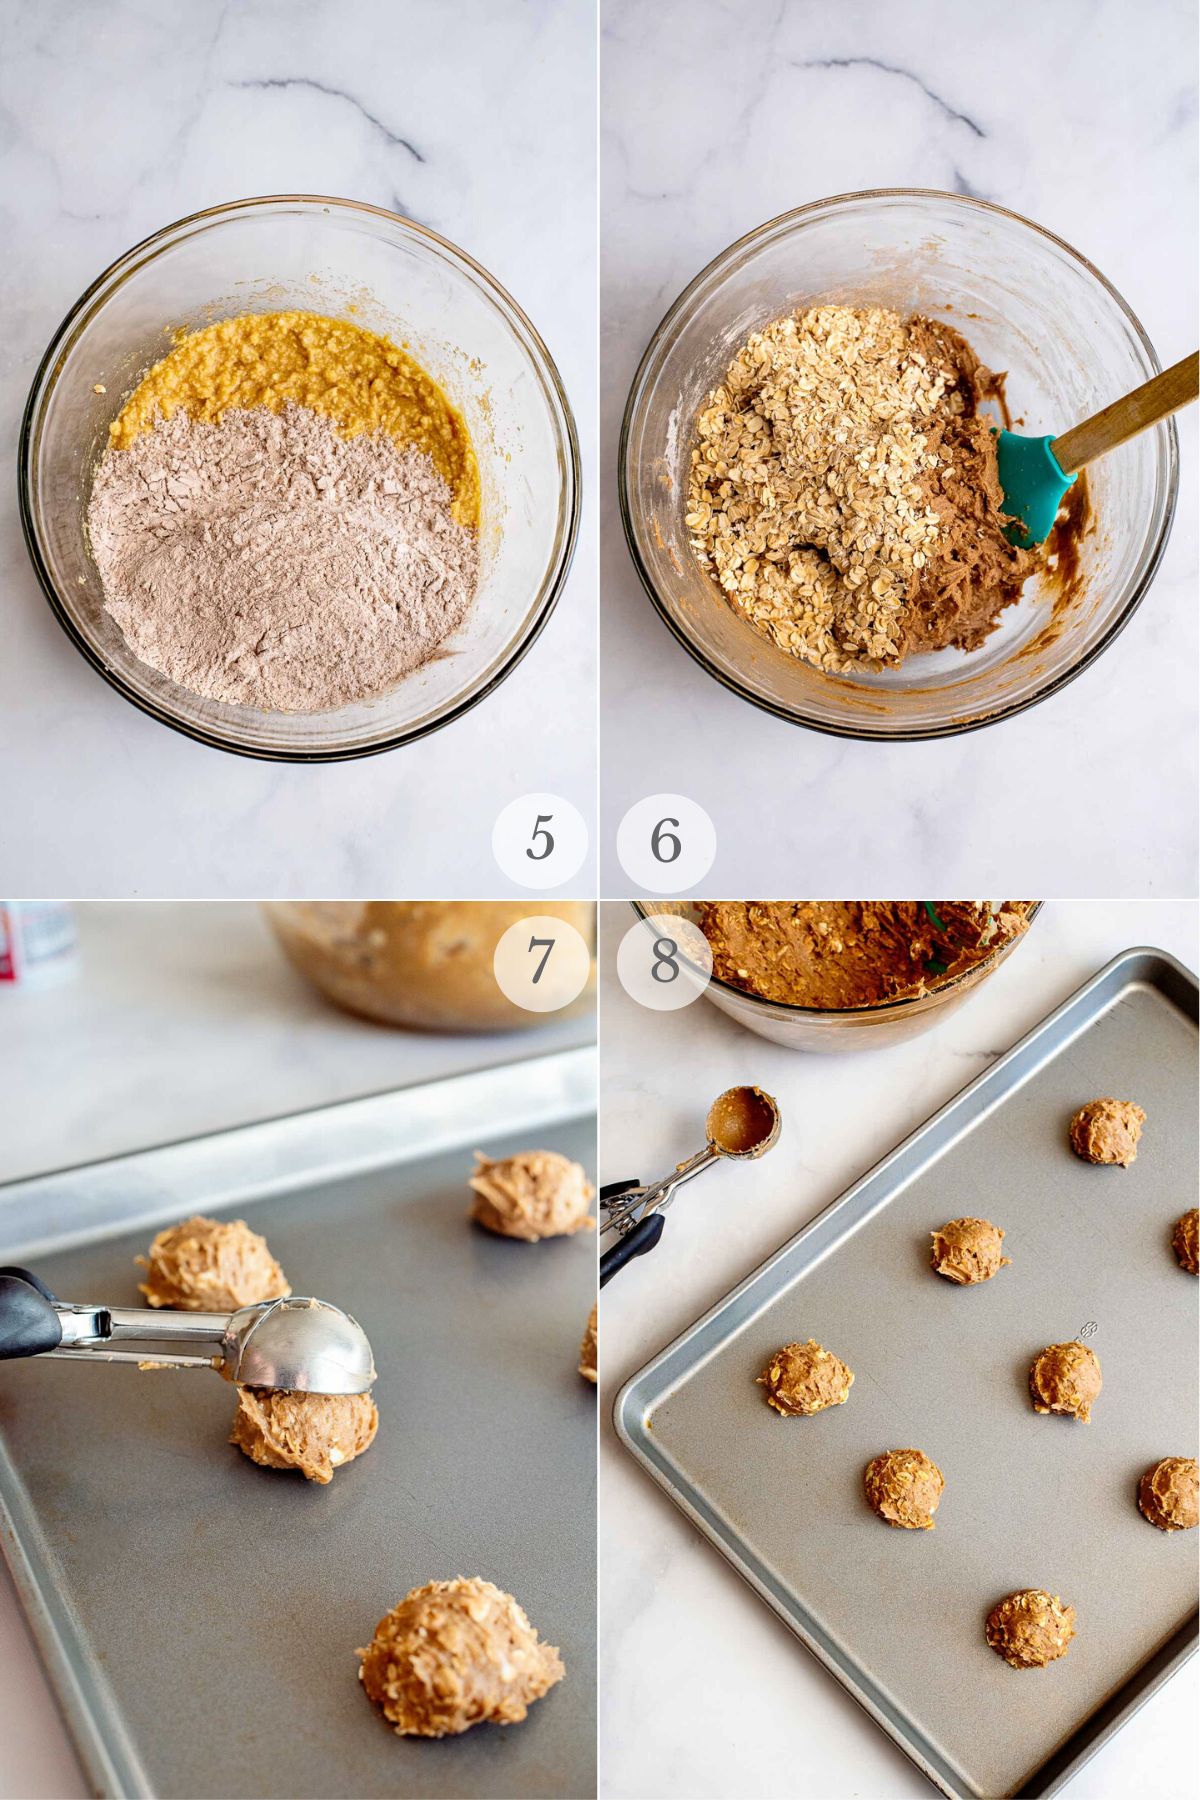 oatmeal cream pies recipe steps 5-8.